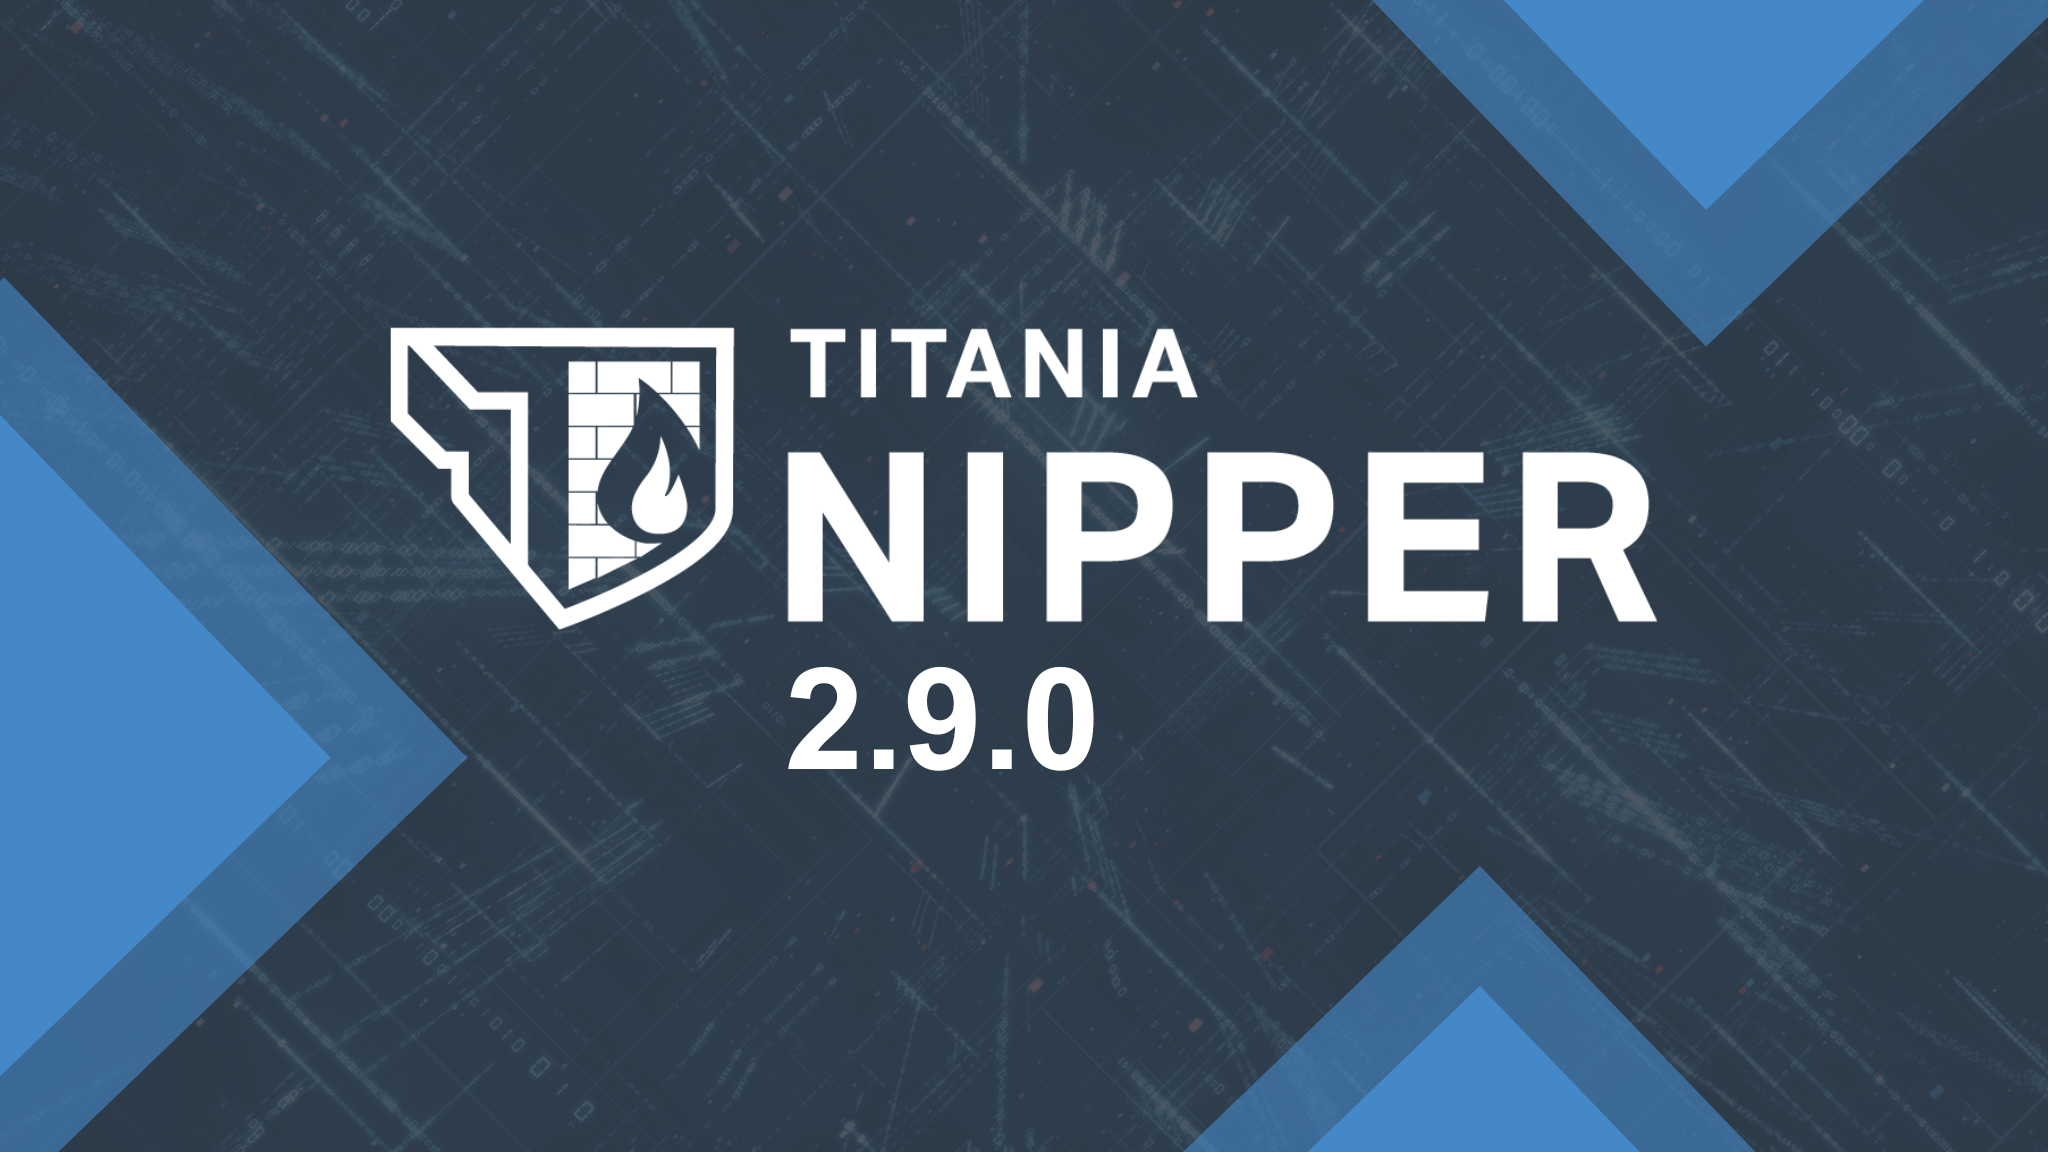 Titania Nipper 2.9.0 released